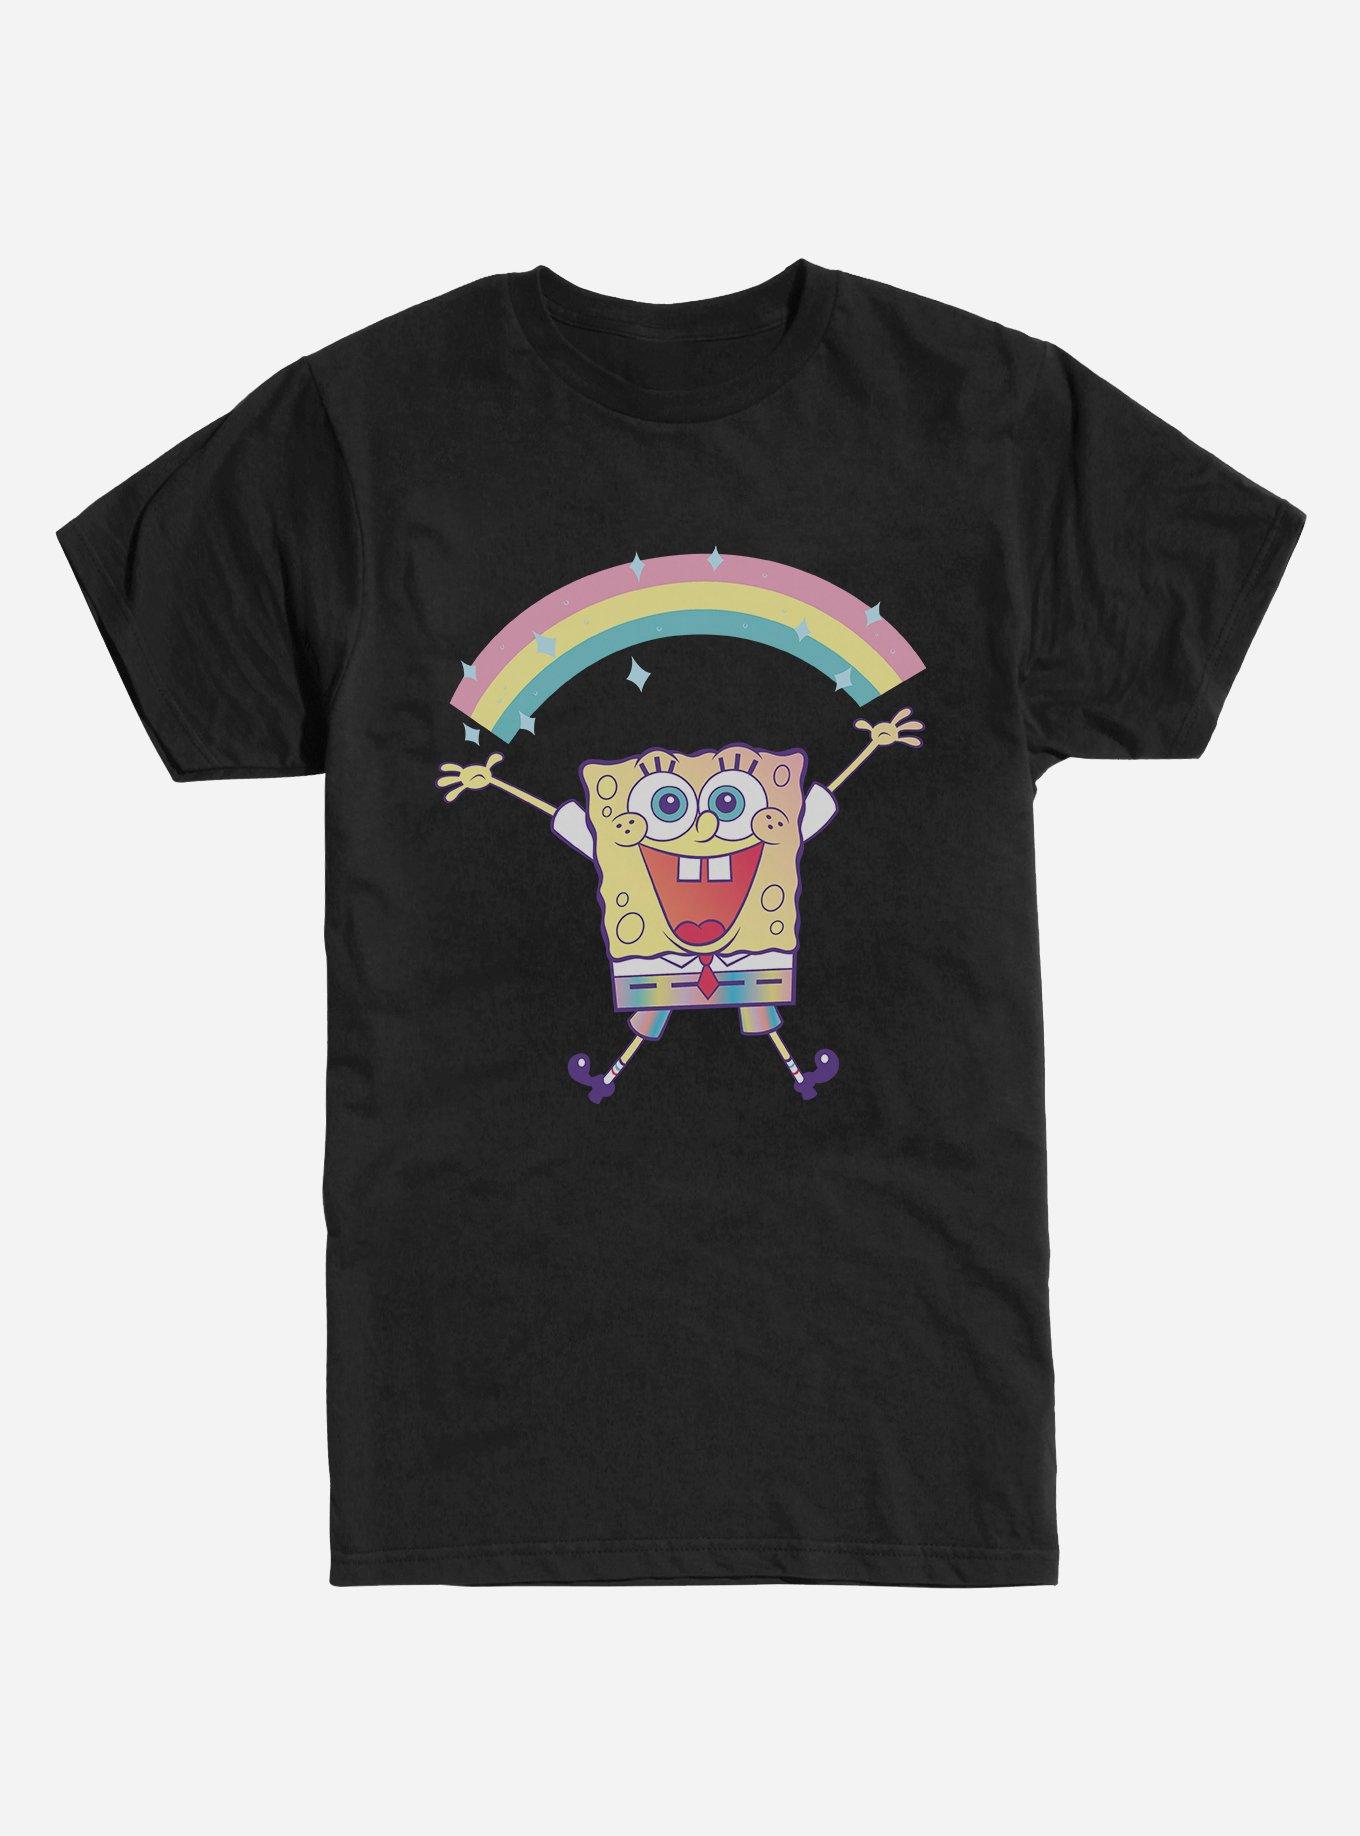 Spongebob Squarepants Rainbow Sparkle T-Shirt